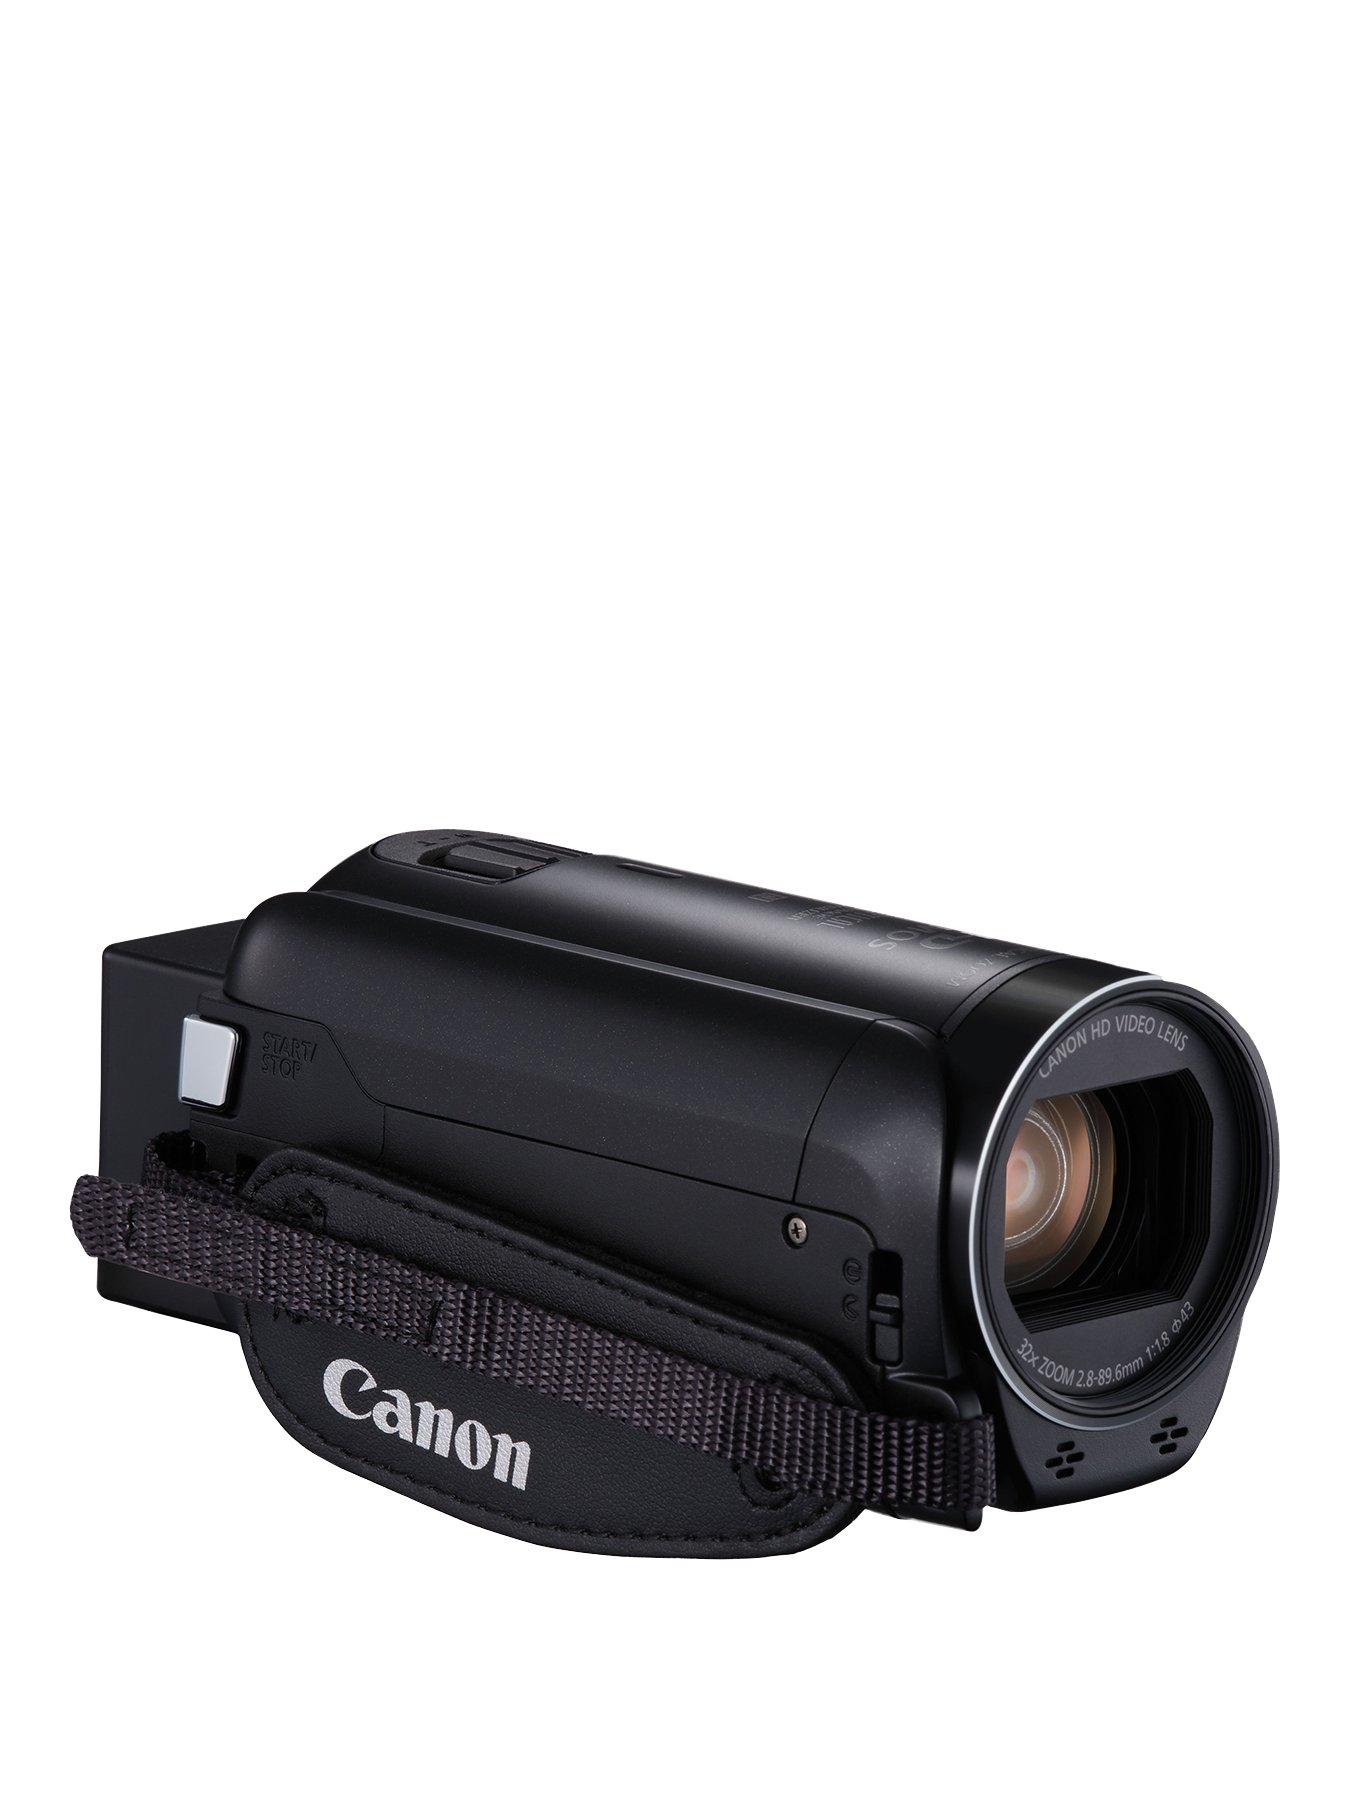 Canon Legria Hf R86 Wifi Camcorder Black